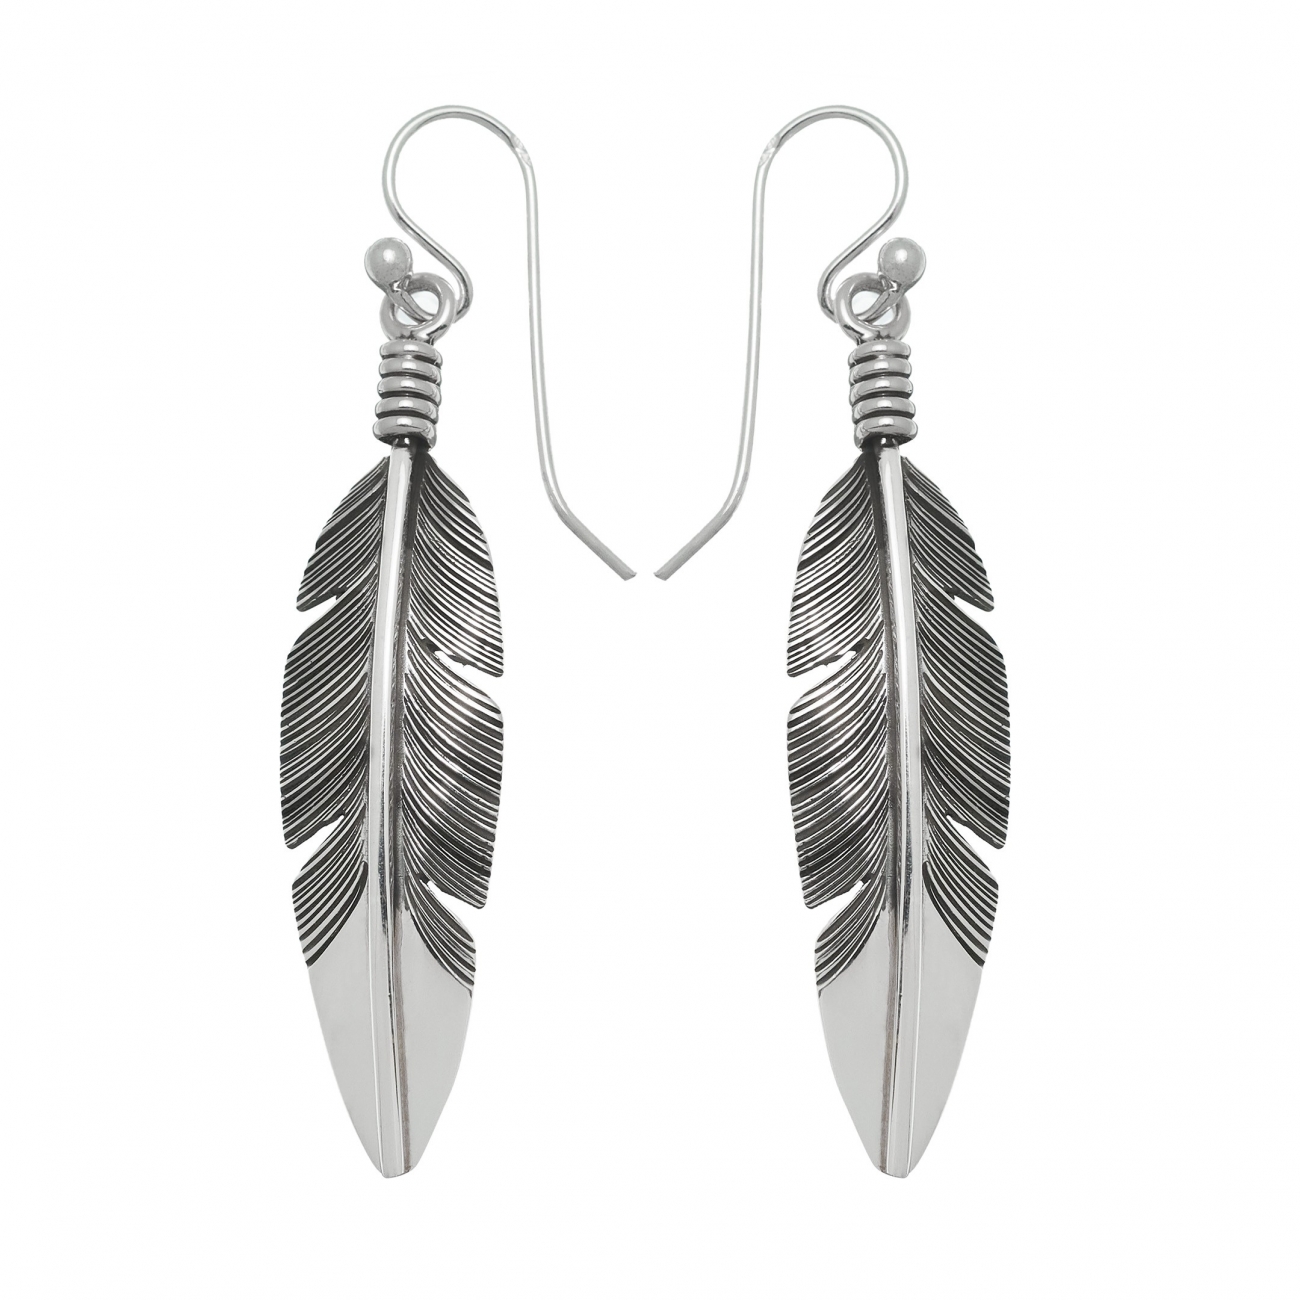 Harpo Paris earrings BOw28 feathers in silver